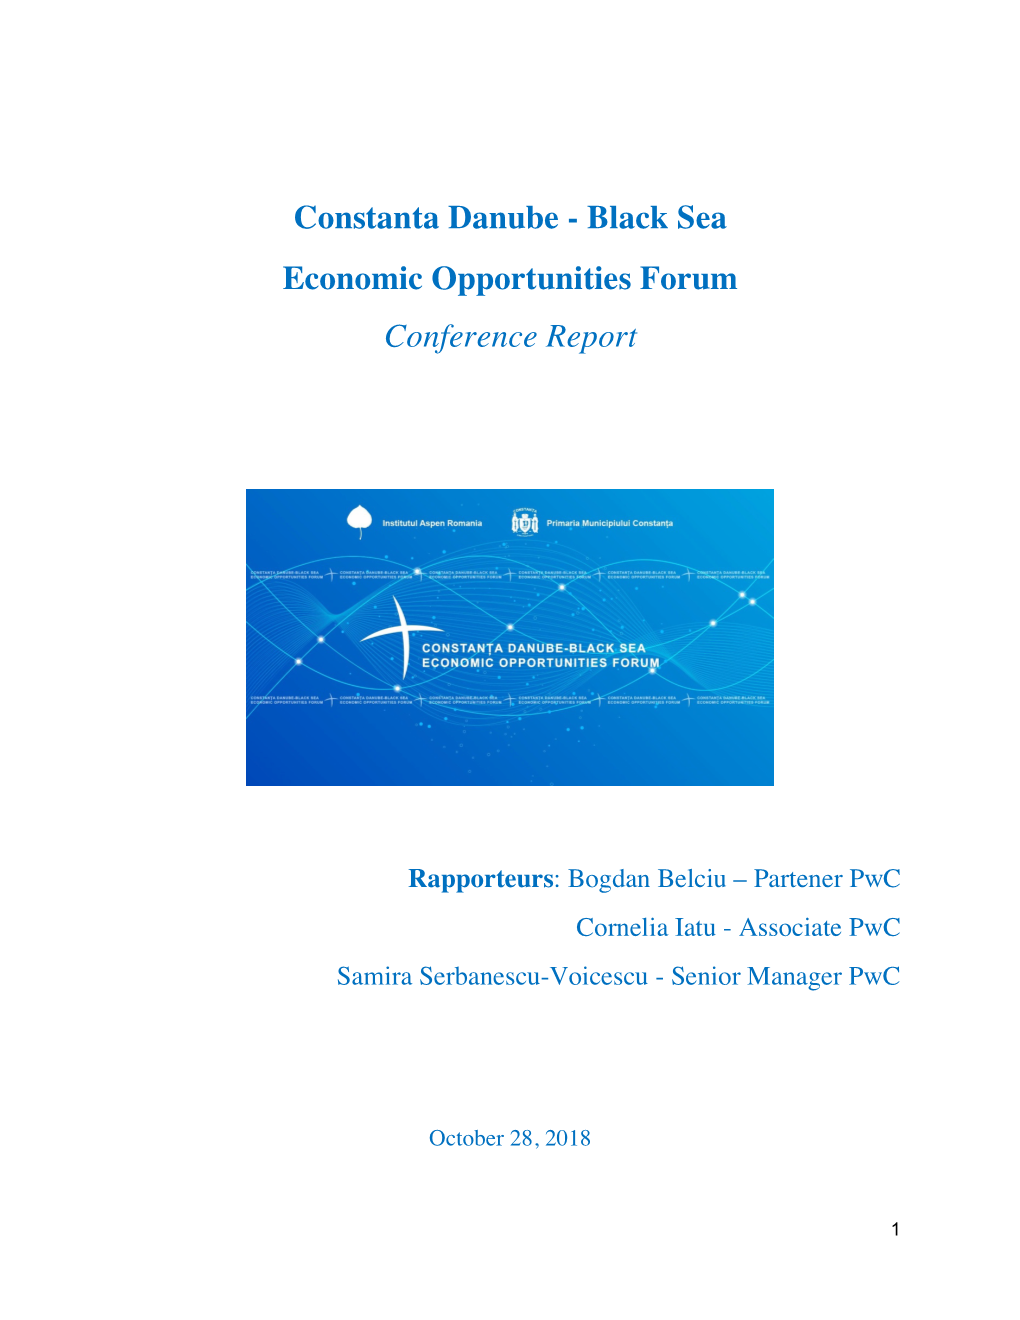 Constanta Danube - Black Sea Economic Opportunities Forum Conference Report